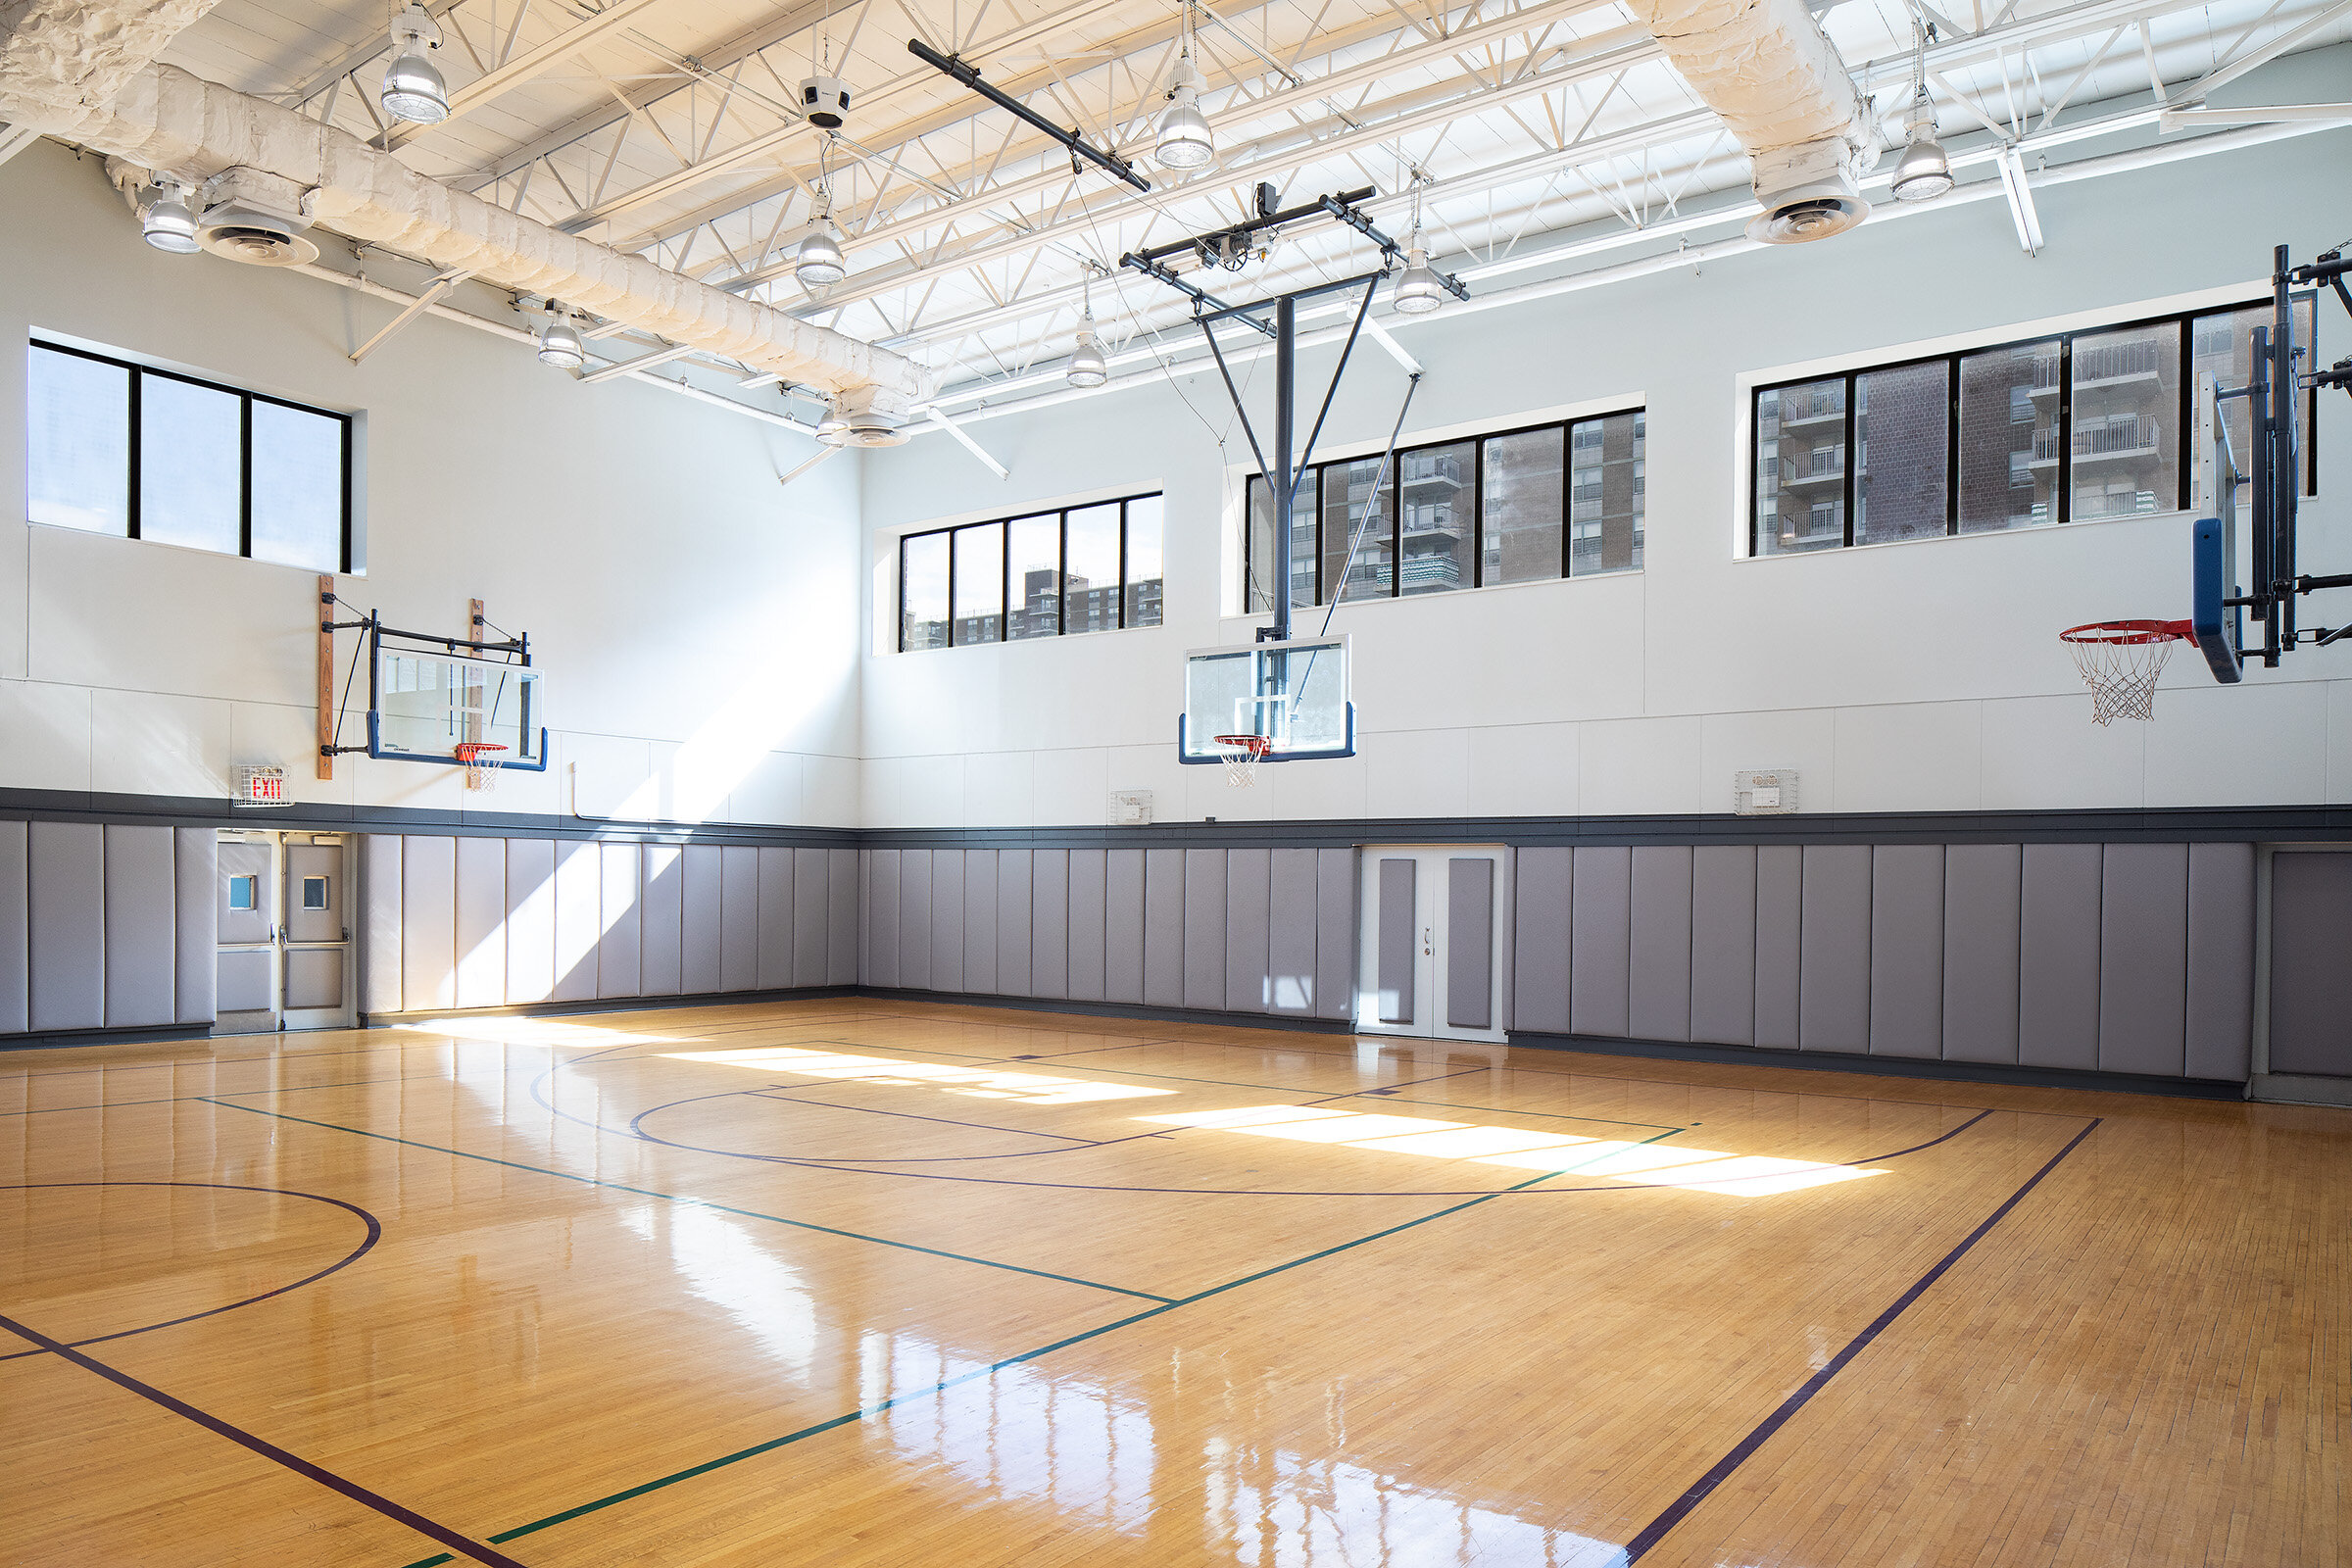 BSC Basketball Court (Copy)